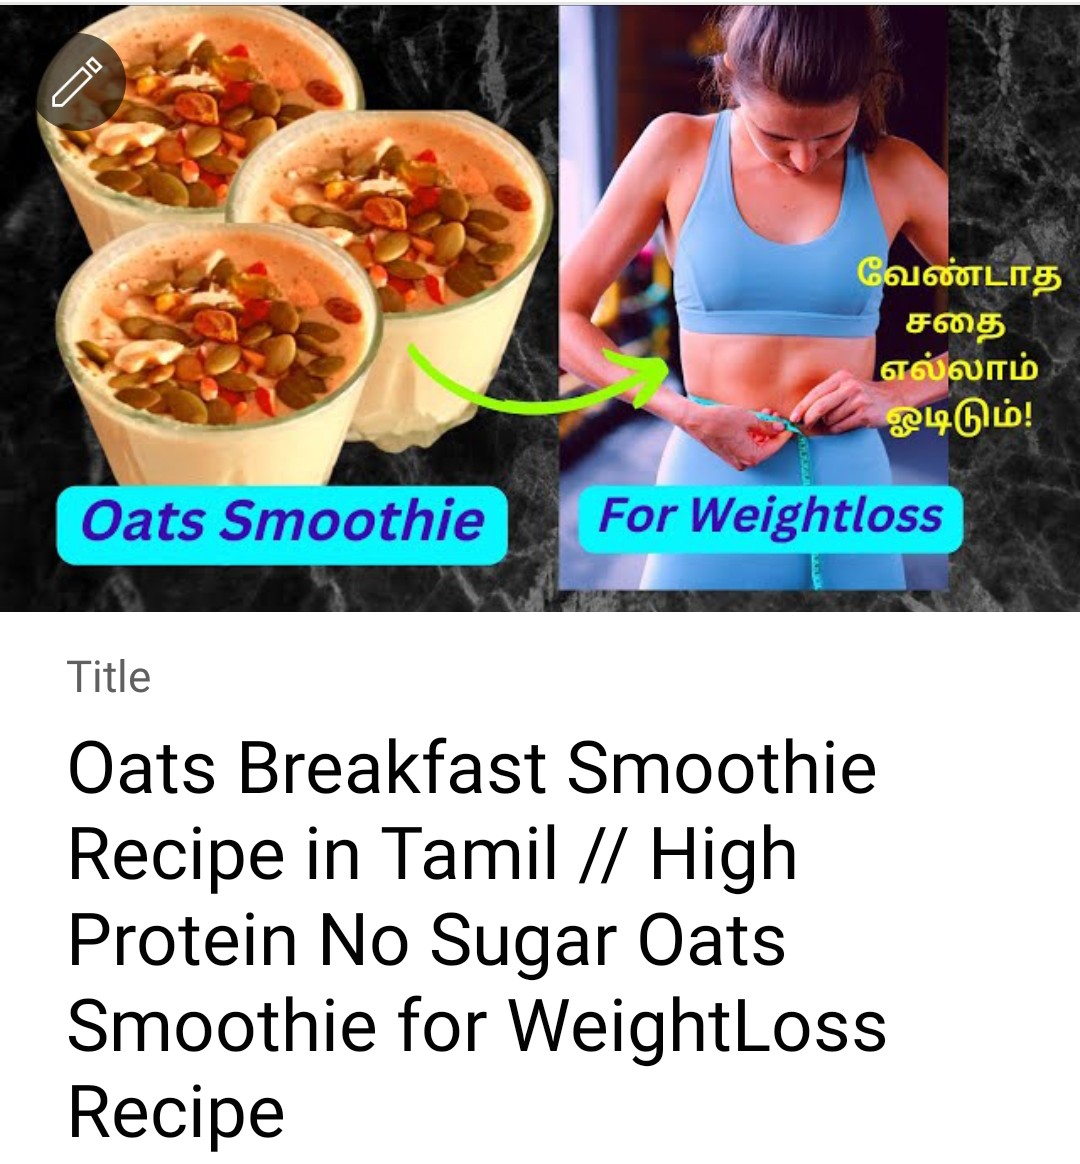 #oatssmoothie in #InbaLife 
#weightloss #weightlossrecipe
Watch and support 
youtu.be/hEznDD1pWYc